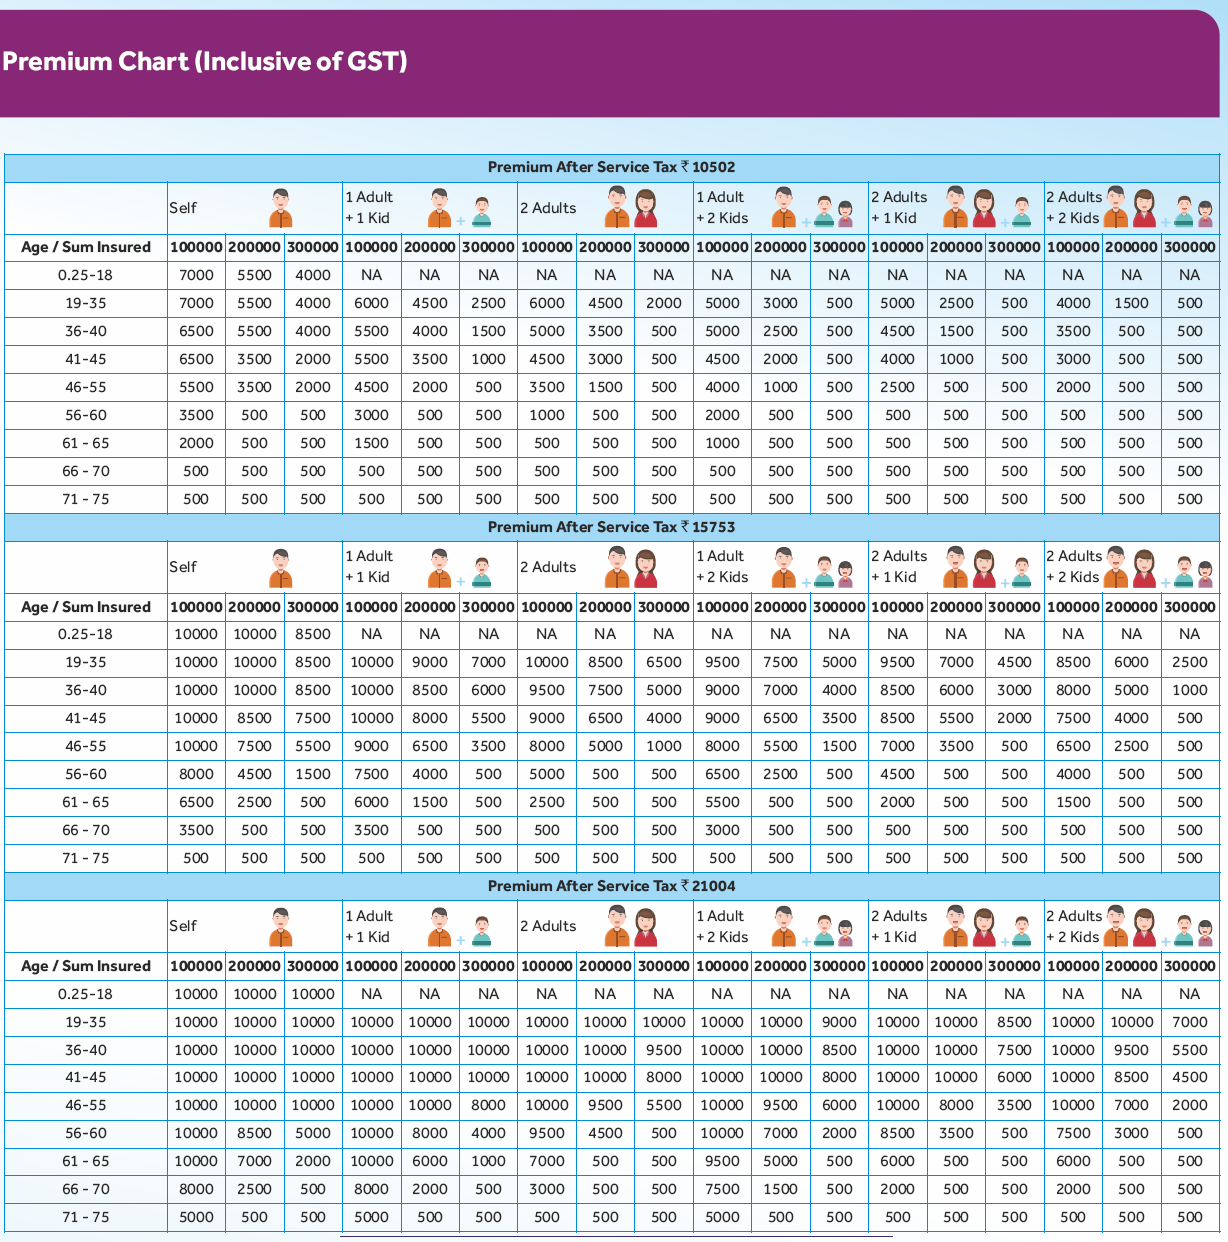 SBI Arogya Plus Premium Chart with GST